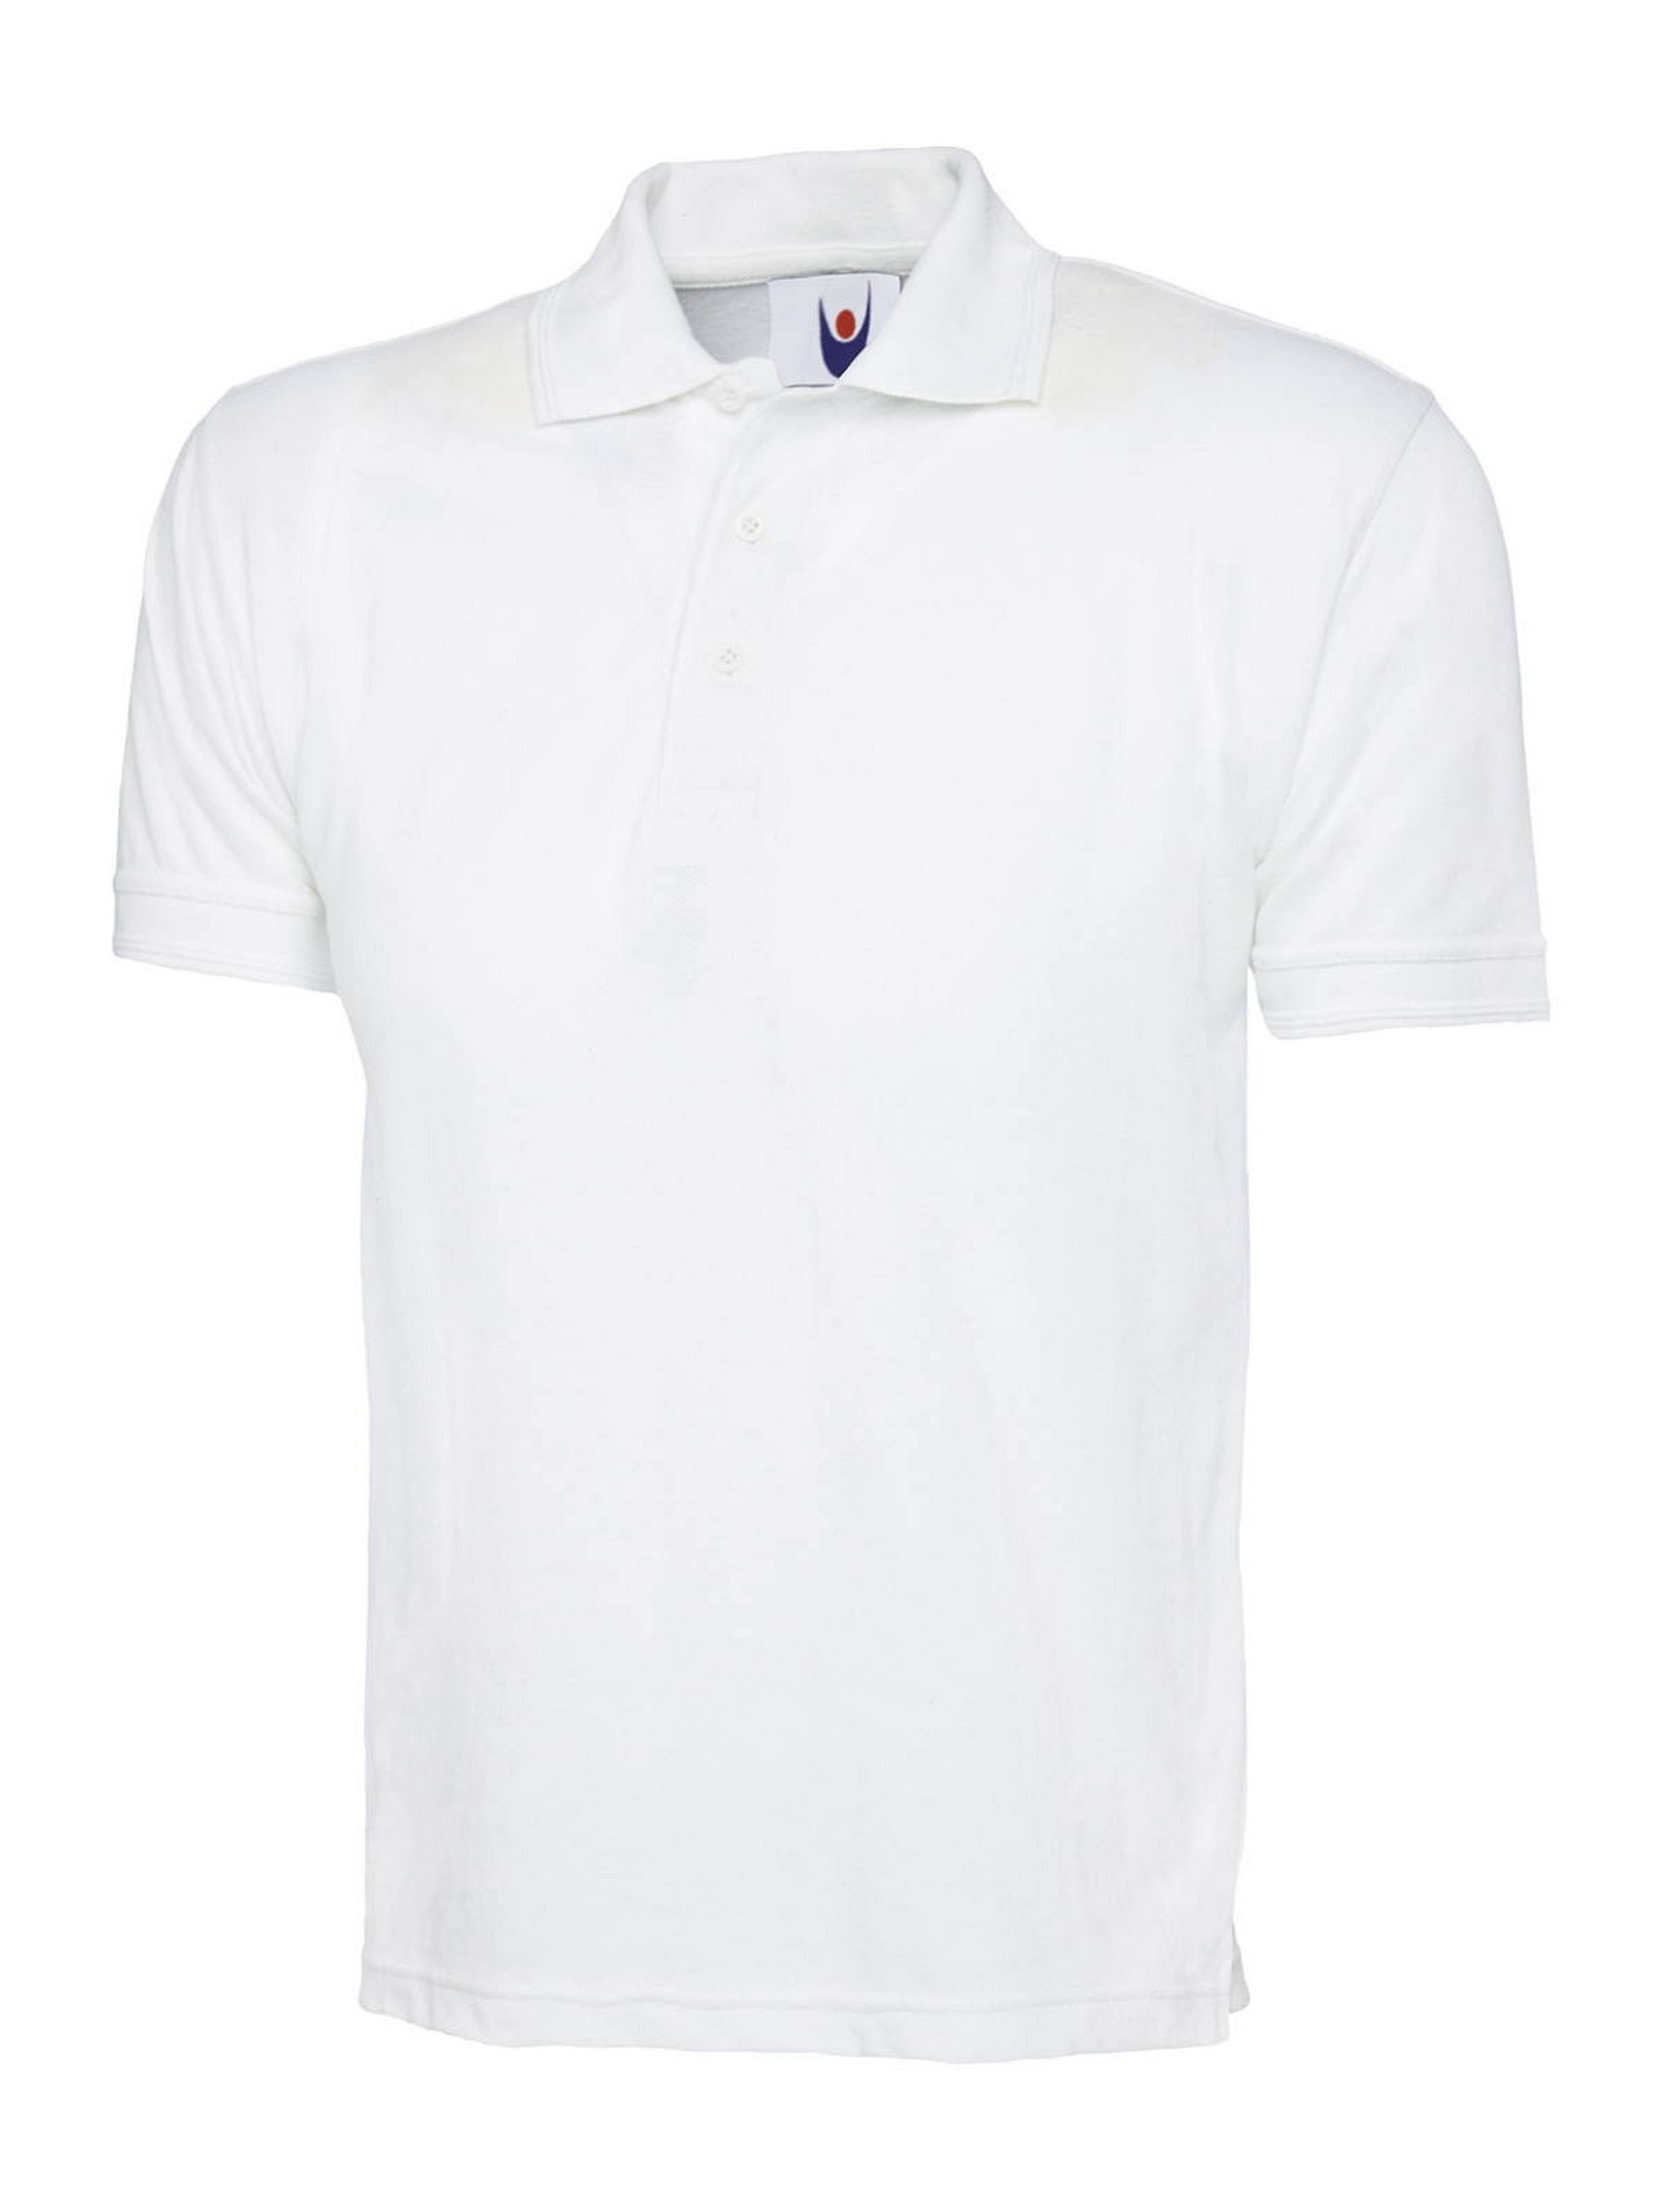 Essential Polo Shirt (UC109) - Logo Studio Workwear